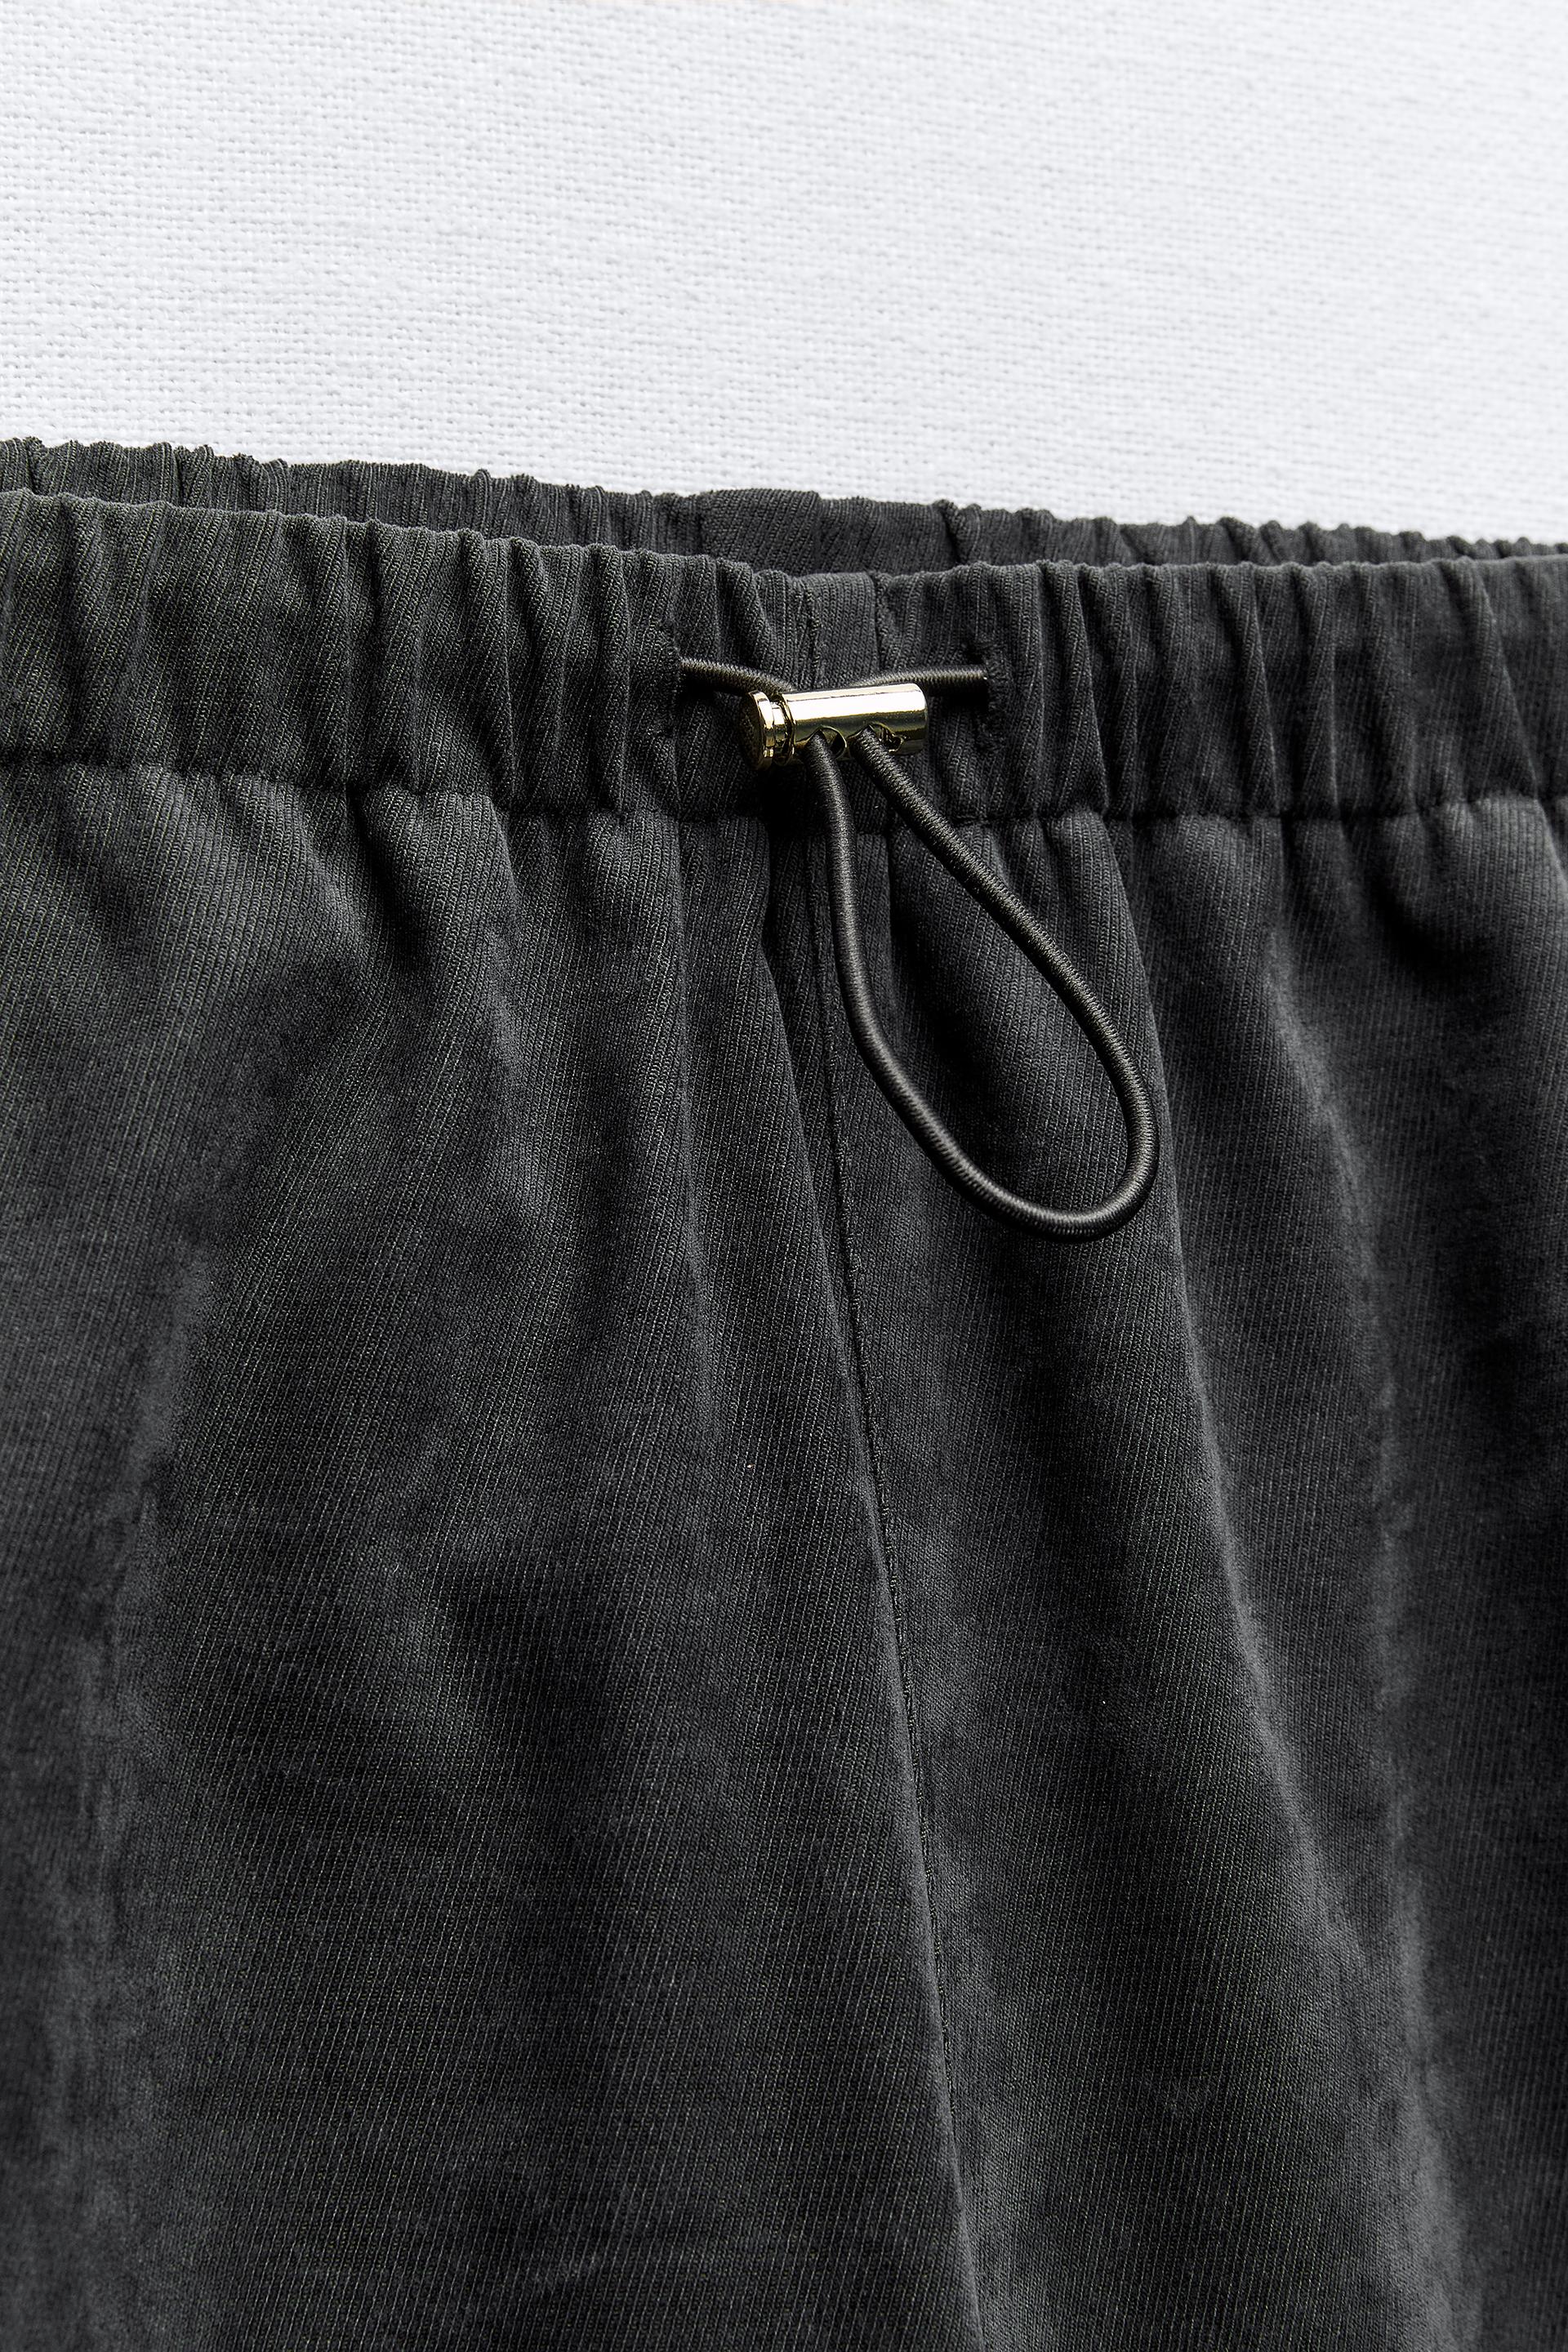 Zara Slash Pockets Plaid Dress Pant Gray Size XS